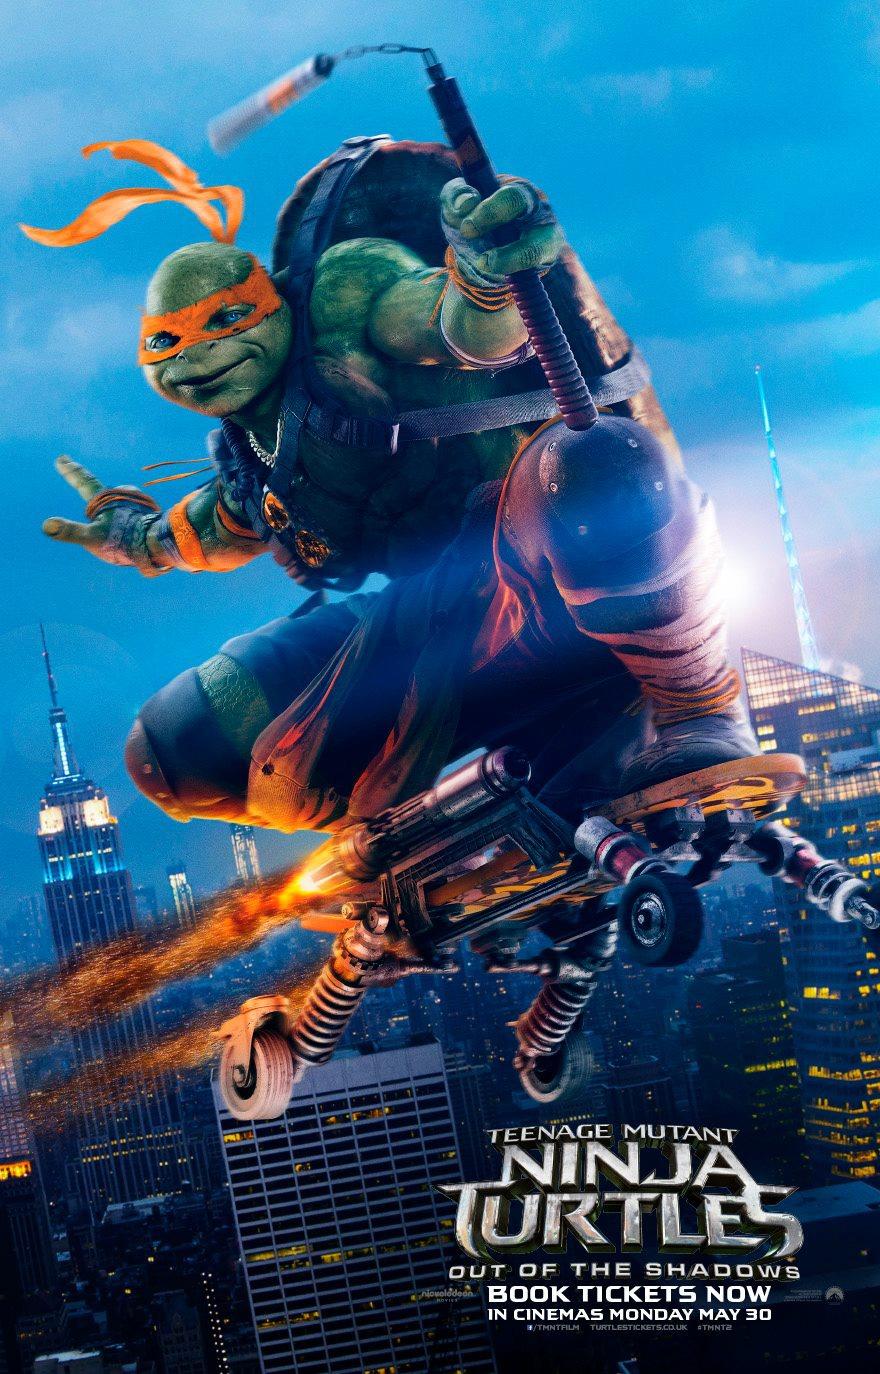 Постер фильма Черепашки-ниндзя 2 | Teenage Mutant Ninja Turtles: Out of the Shadows